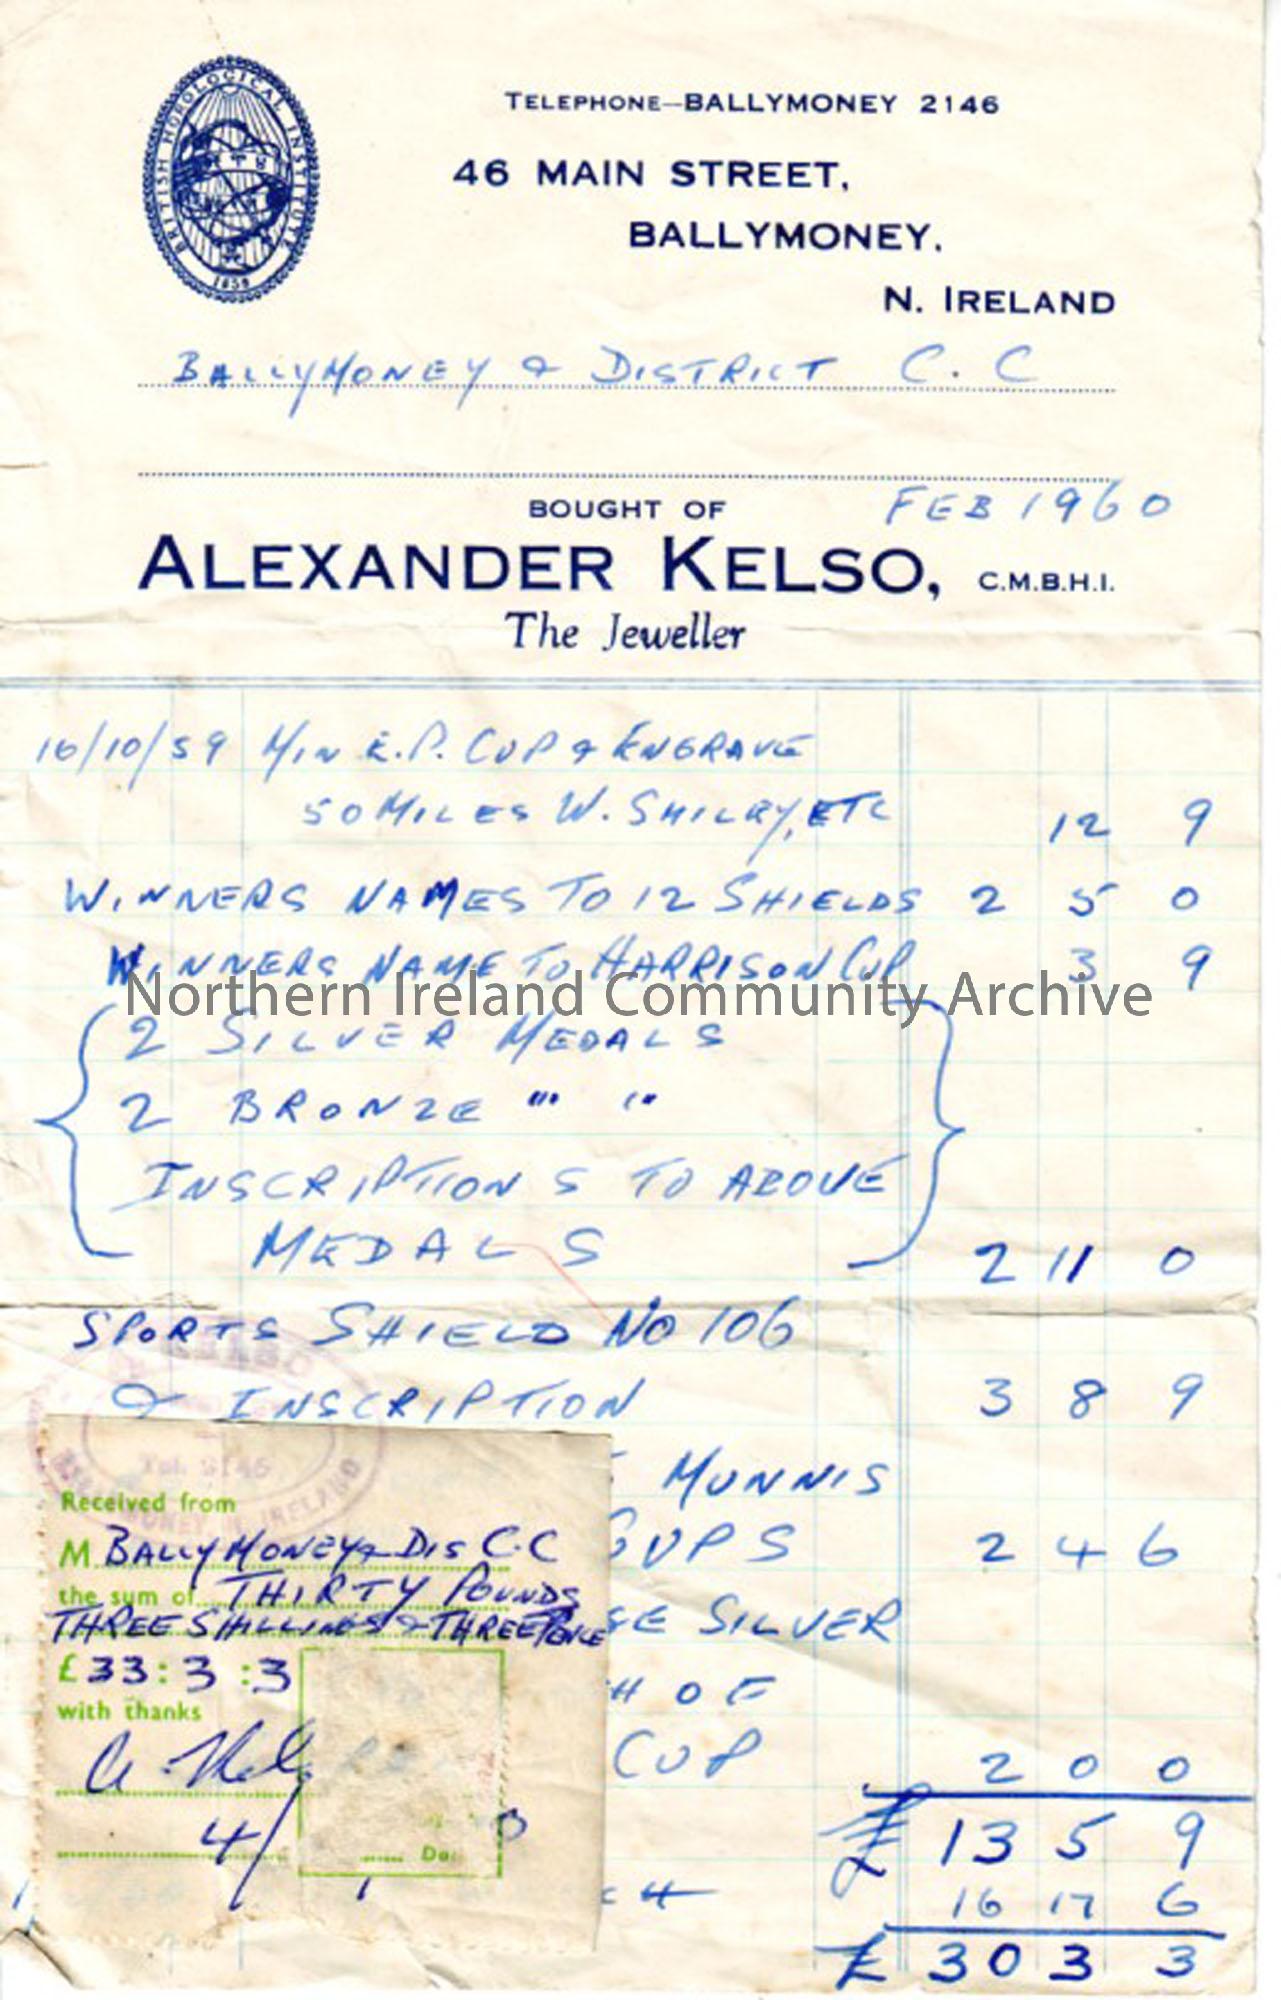 Invoice from Alexander Kelso, The Jeweller, 46 Main Street, Ballymoney, N.Ireland to Ballymoney & District C.C. Feb 1960.